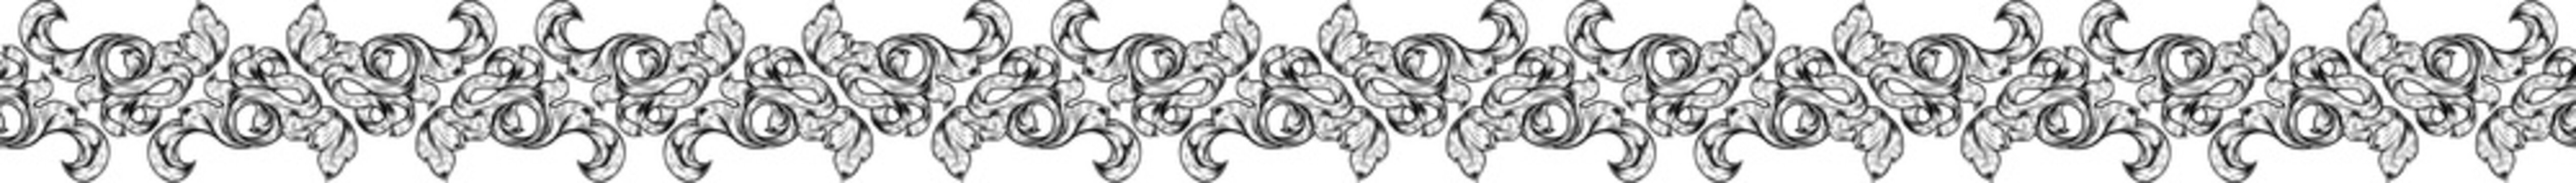 Art Nouveau Border Band Frame Floral Motif Pattern